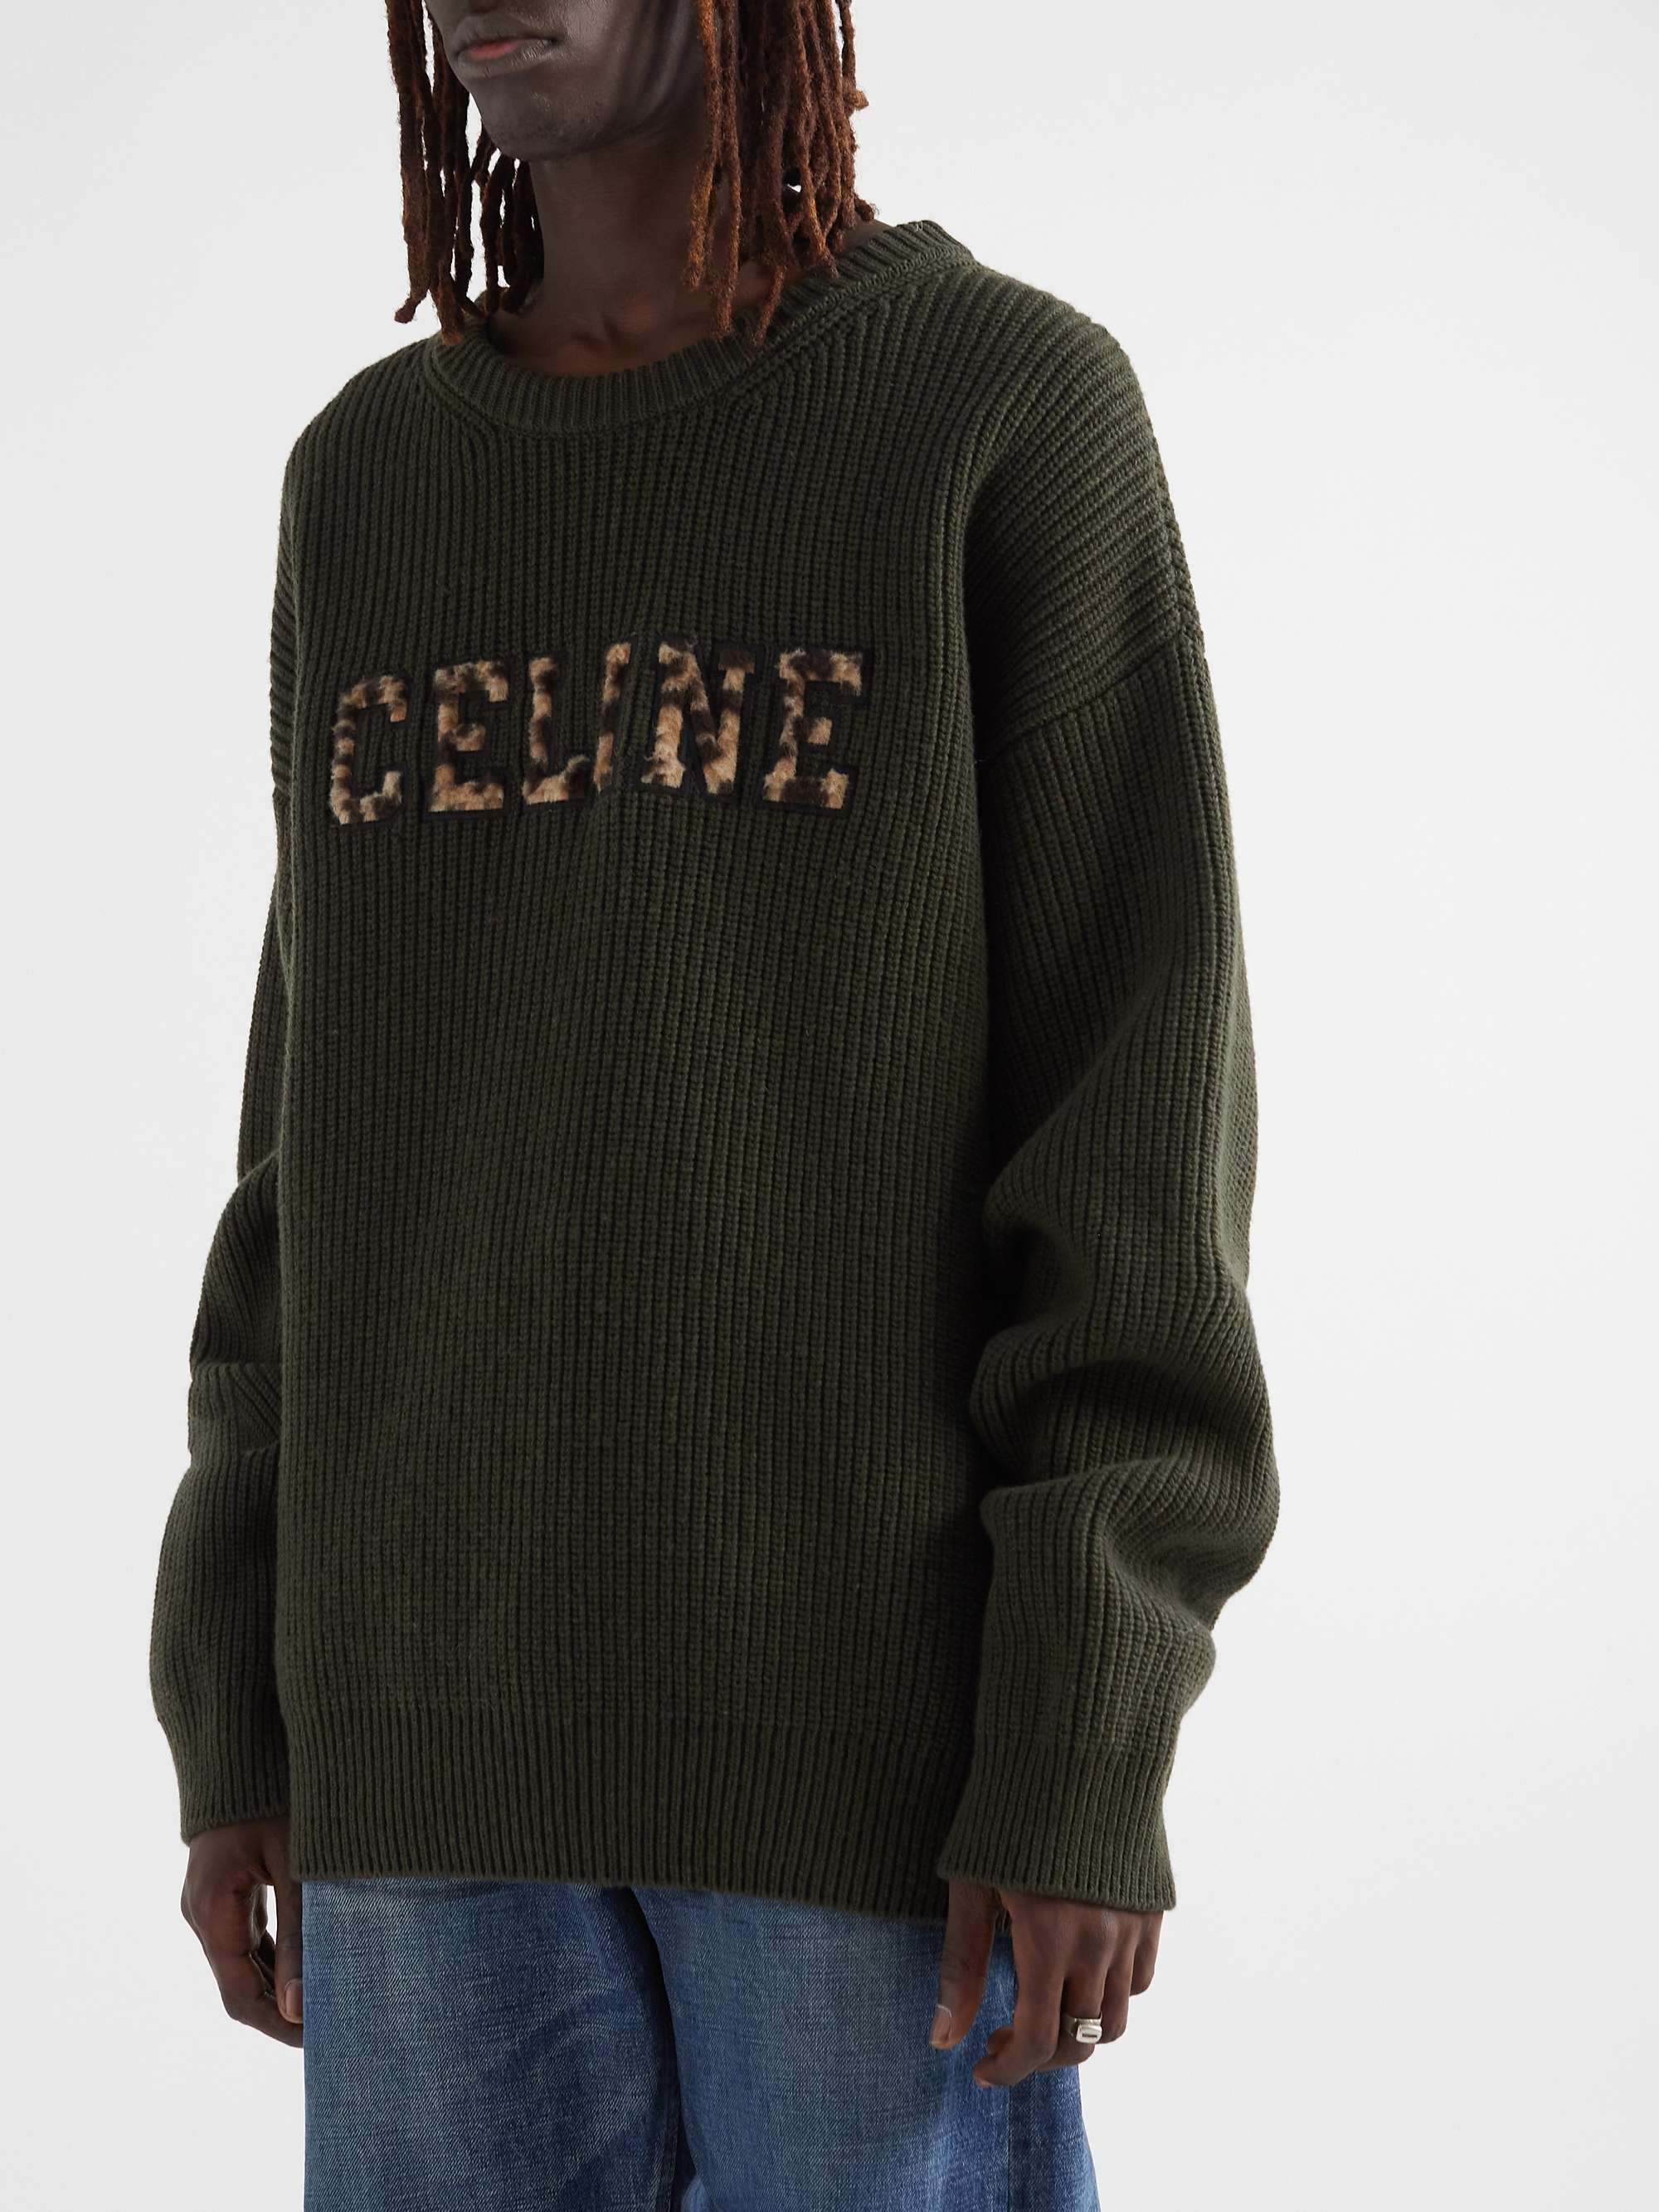 CELINE HOMME Logo-Appliquéd Ribbed Wool Sweater